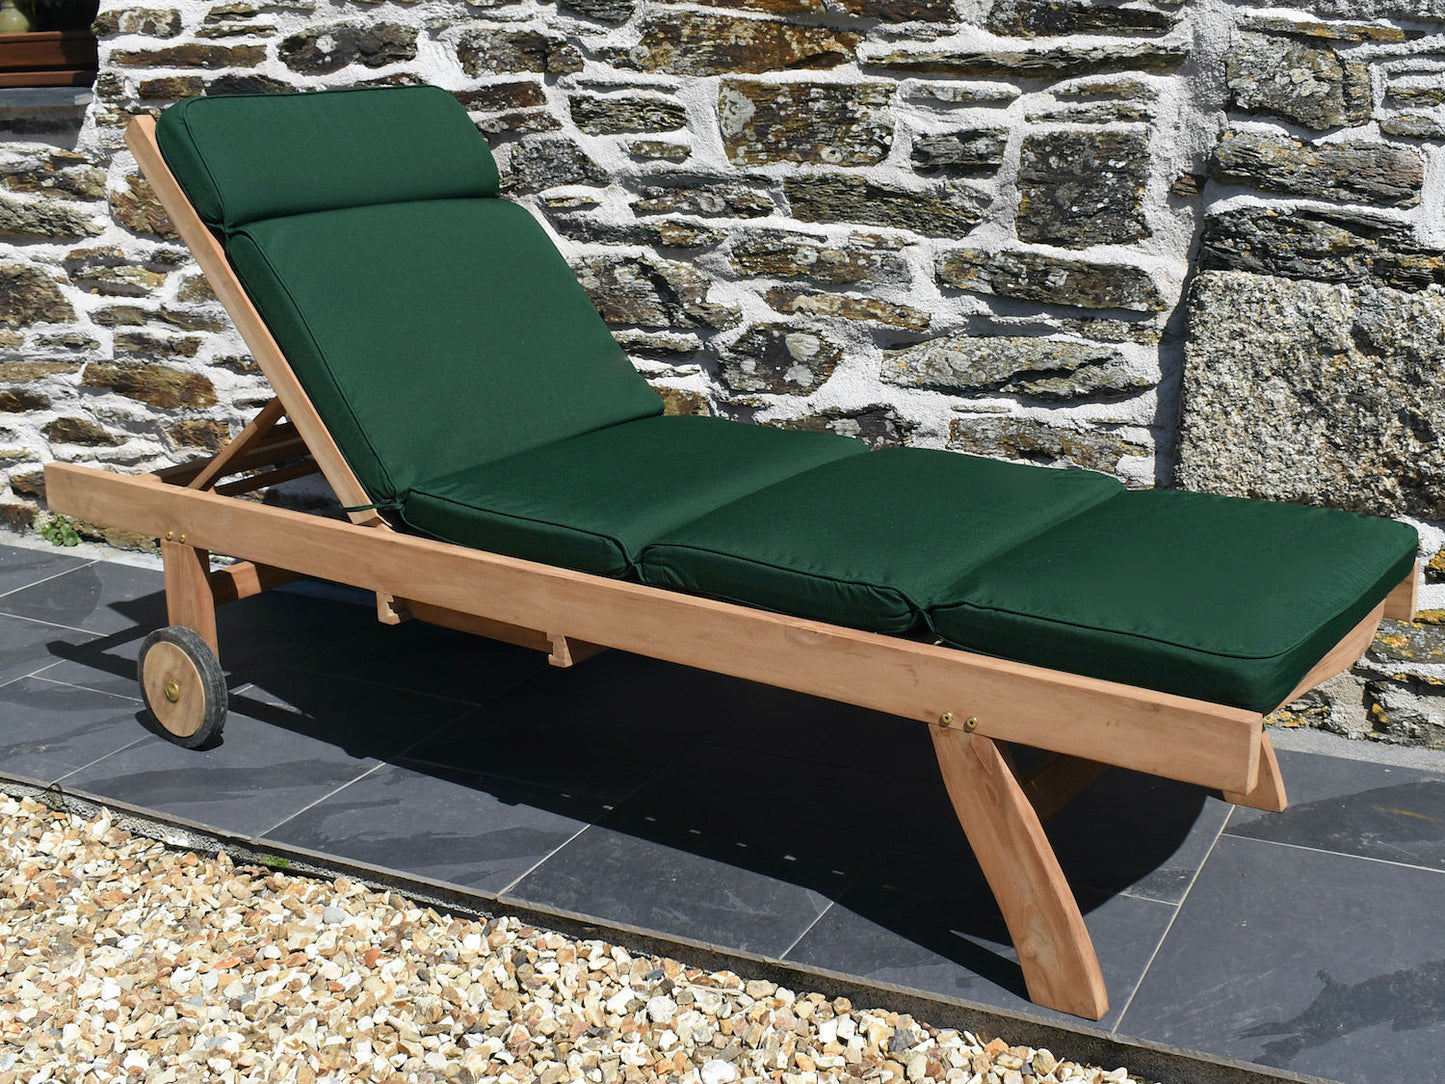 Traditional dark forest green colour outdoor cushion for a garden sun lounger chair